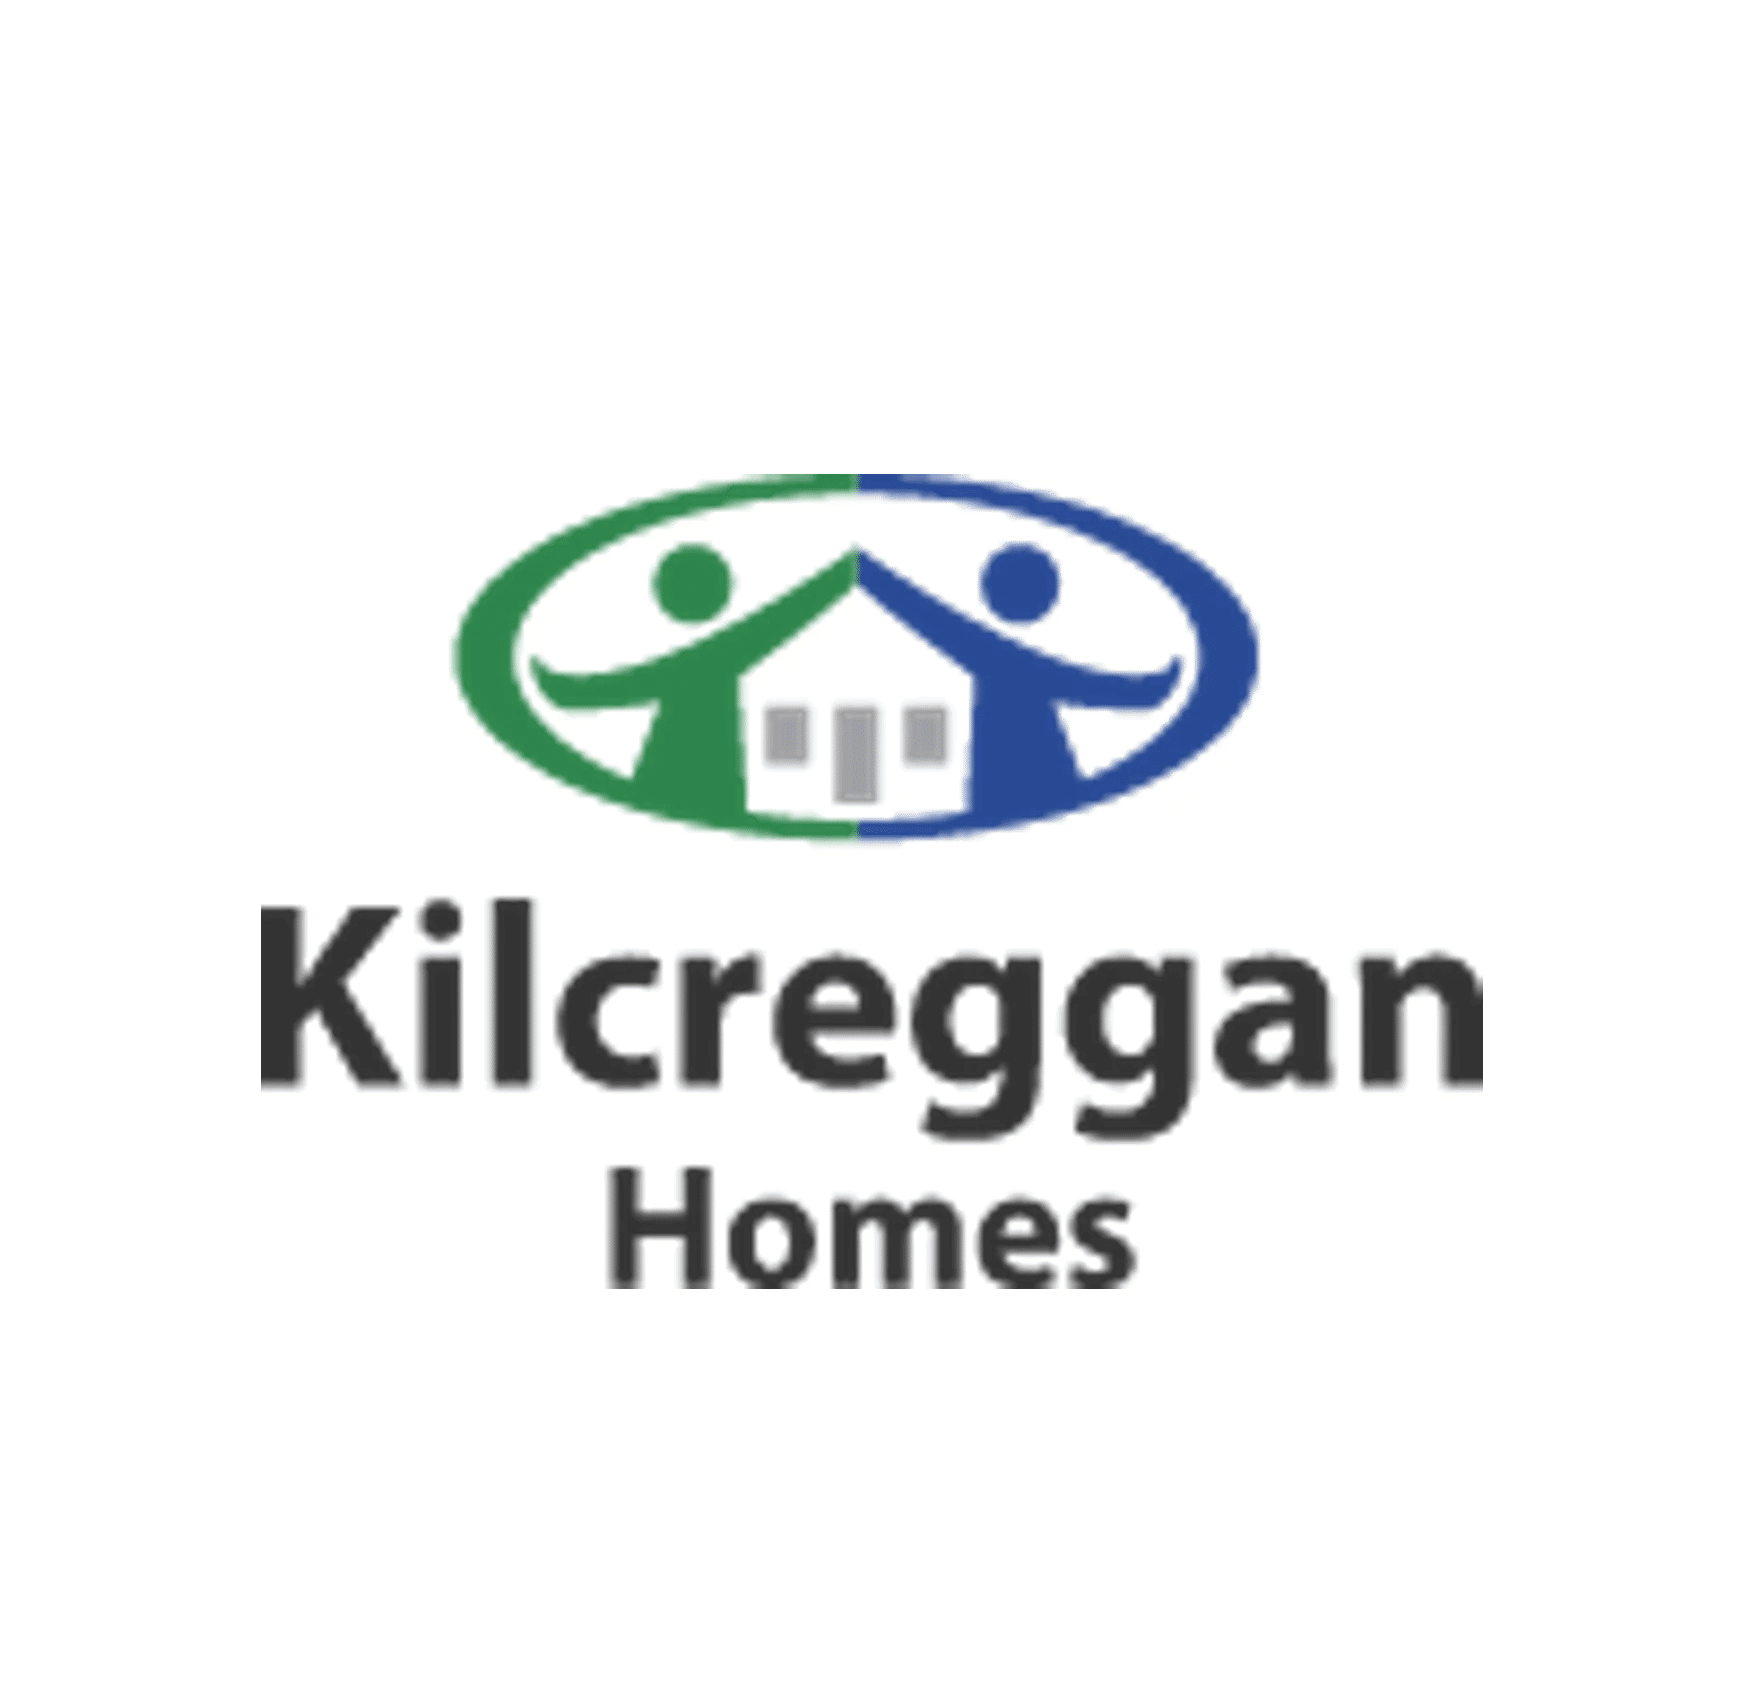 kilgreggan homes